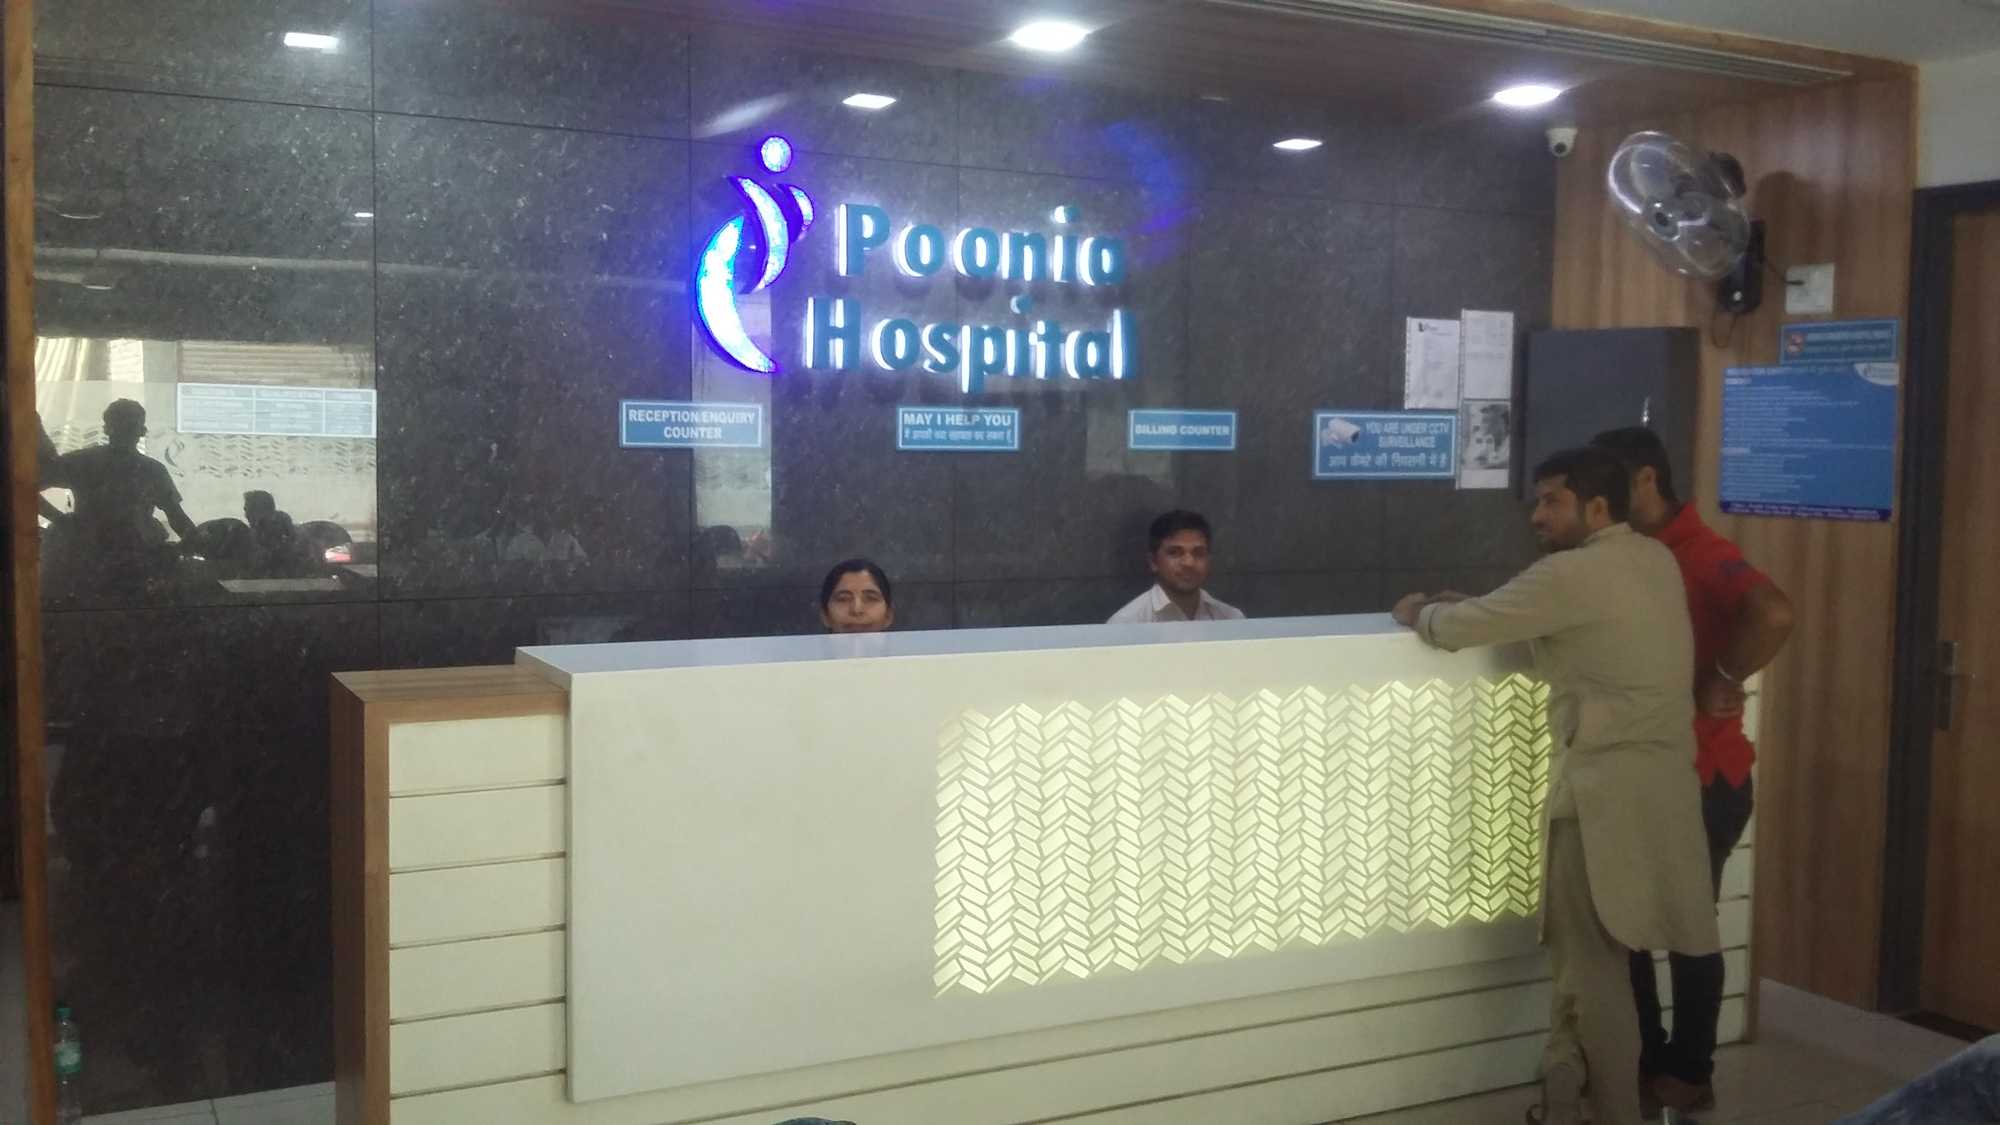 Poonia Hospital|Clinics|Medical Services